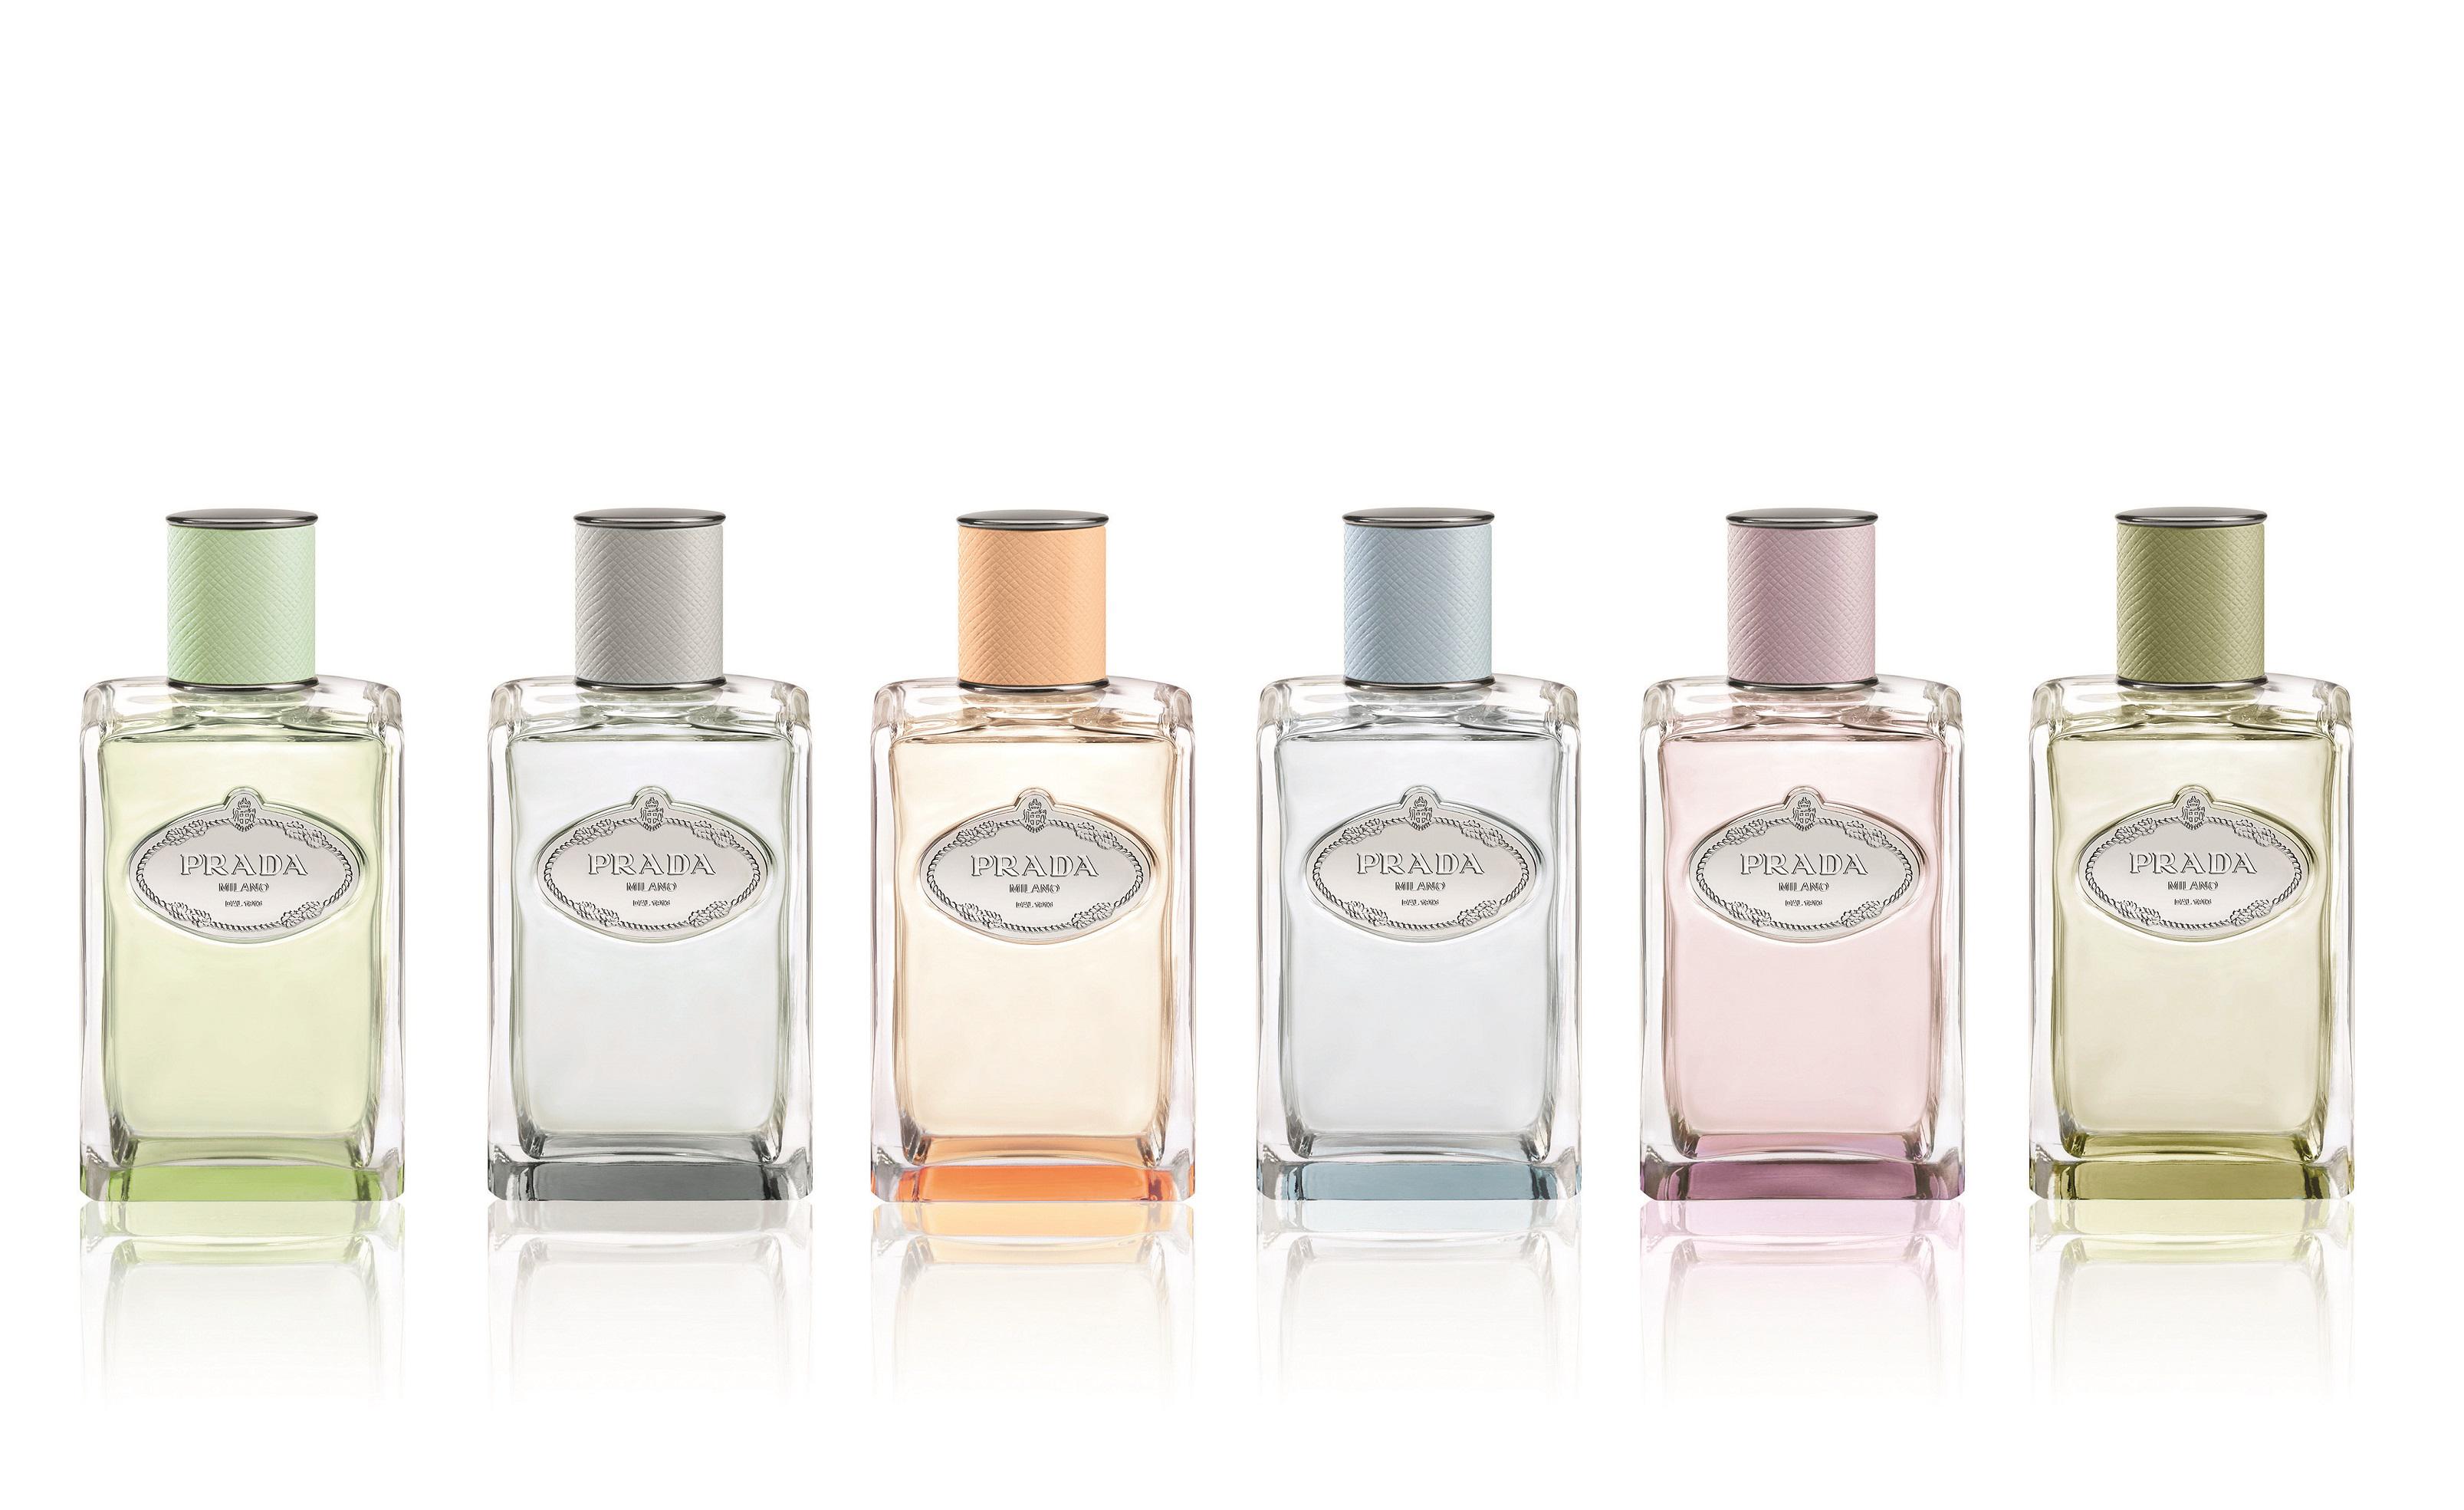 Le sei fragranze di Prada 'Les Infusions': 'Iris', 'Iris Cèdre', 'Fleur d'Oranger', 'Vétiver', 'Oeillet' e 'Amande', ognuna in elegante contrasto fra tradizione e modernità